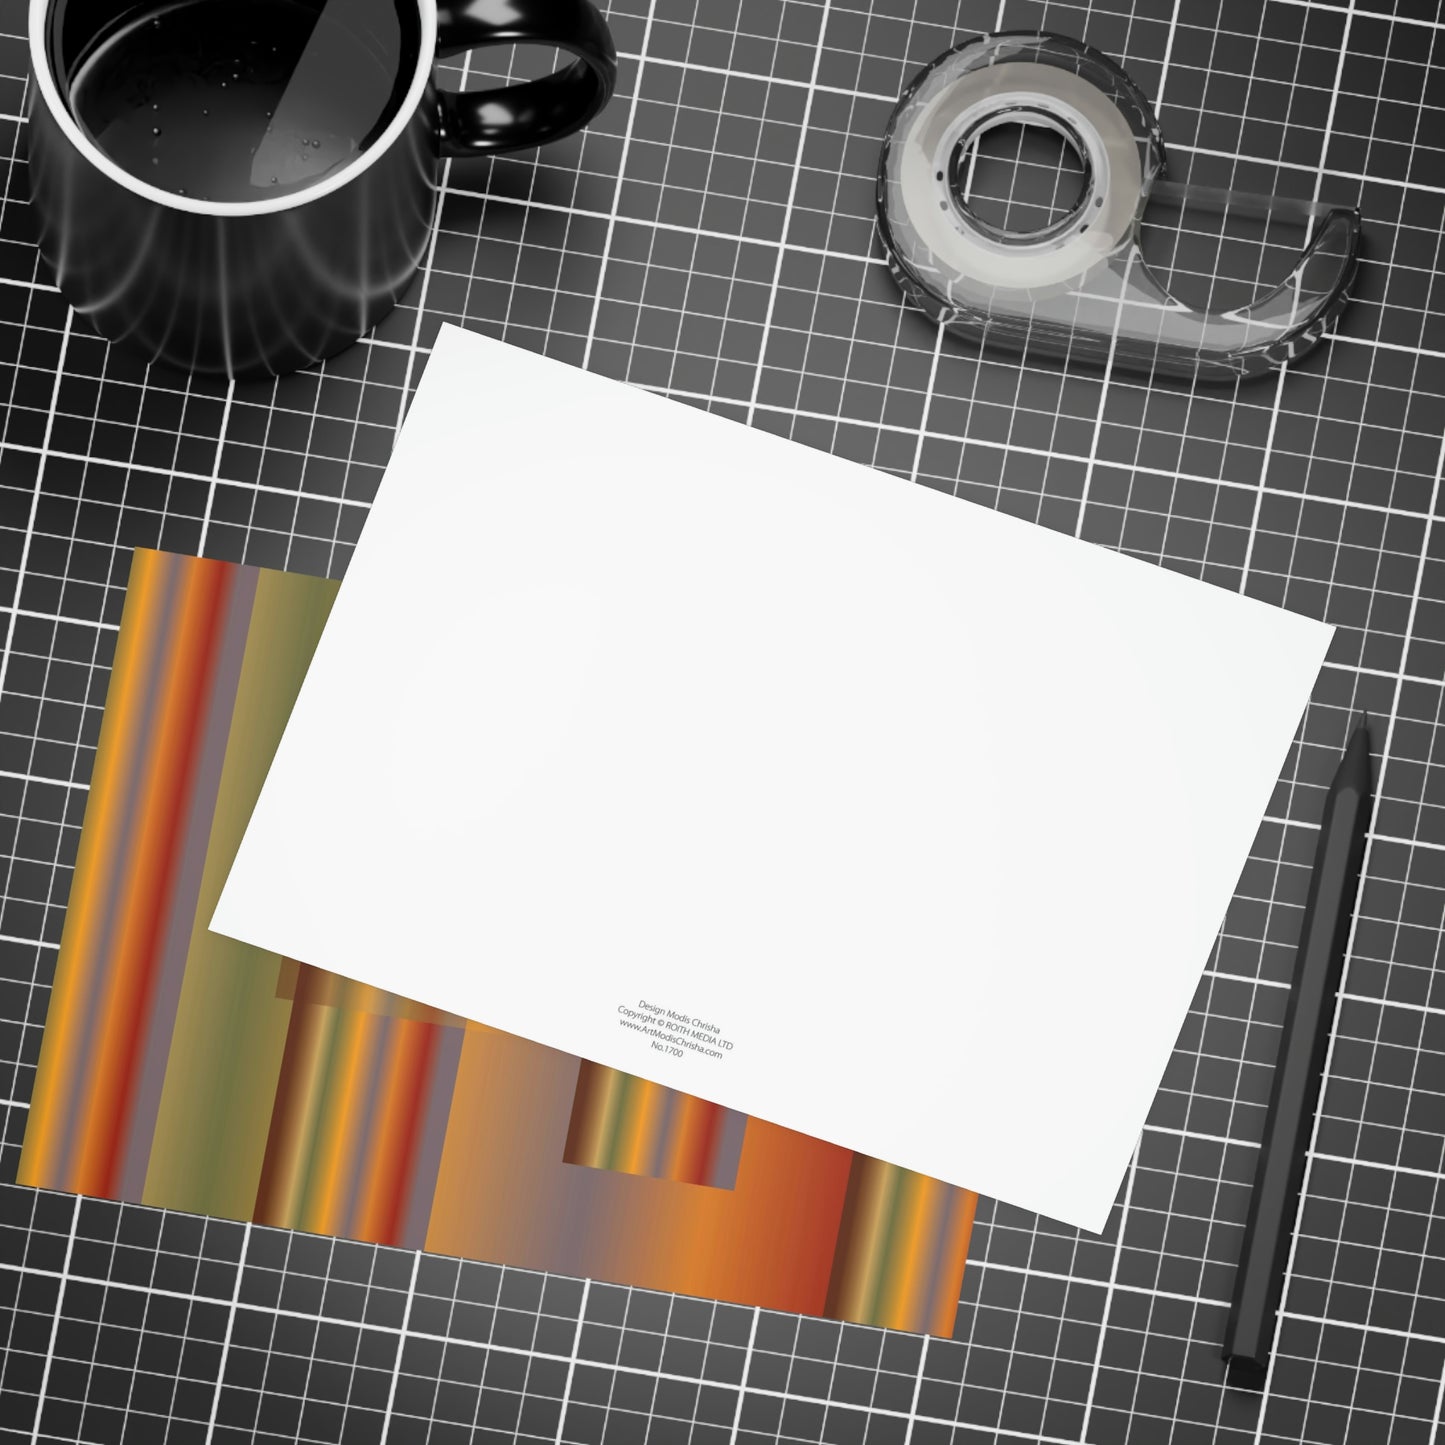 Art Greeting Postcard  Horizontal (10, 30, and 50pcs) Keep Going - Design No.1700